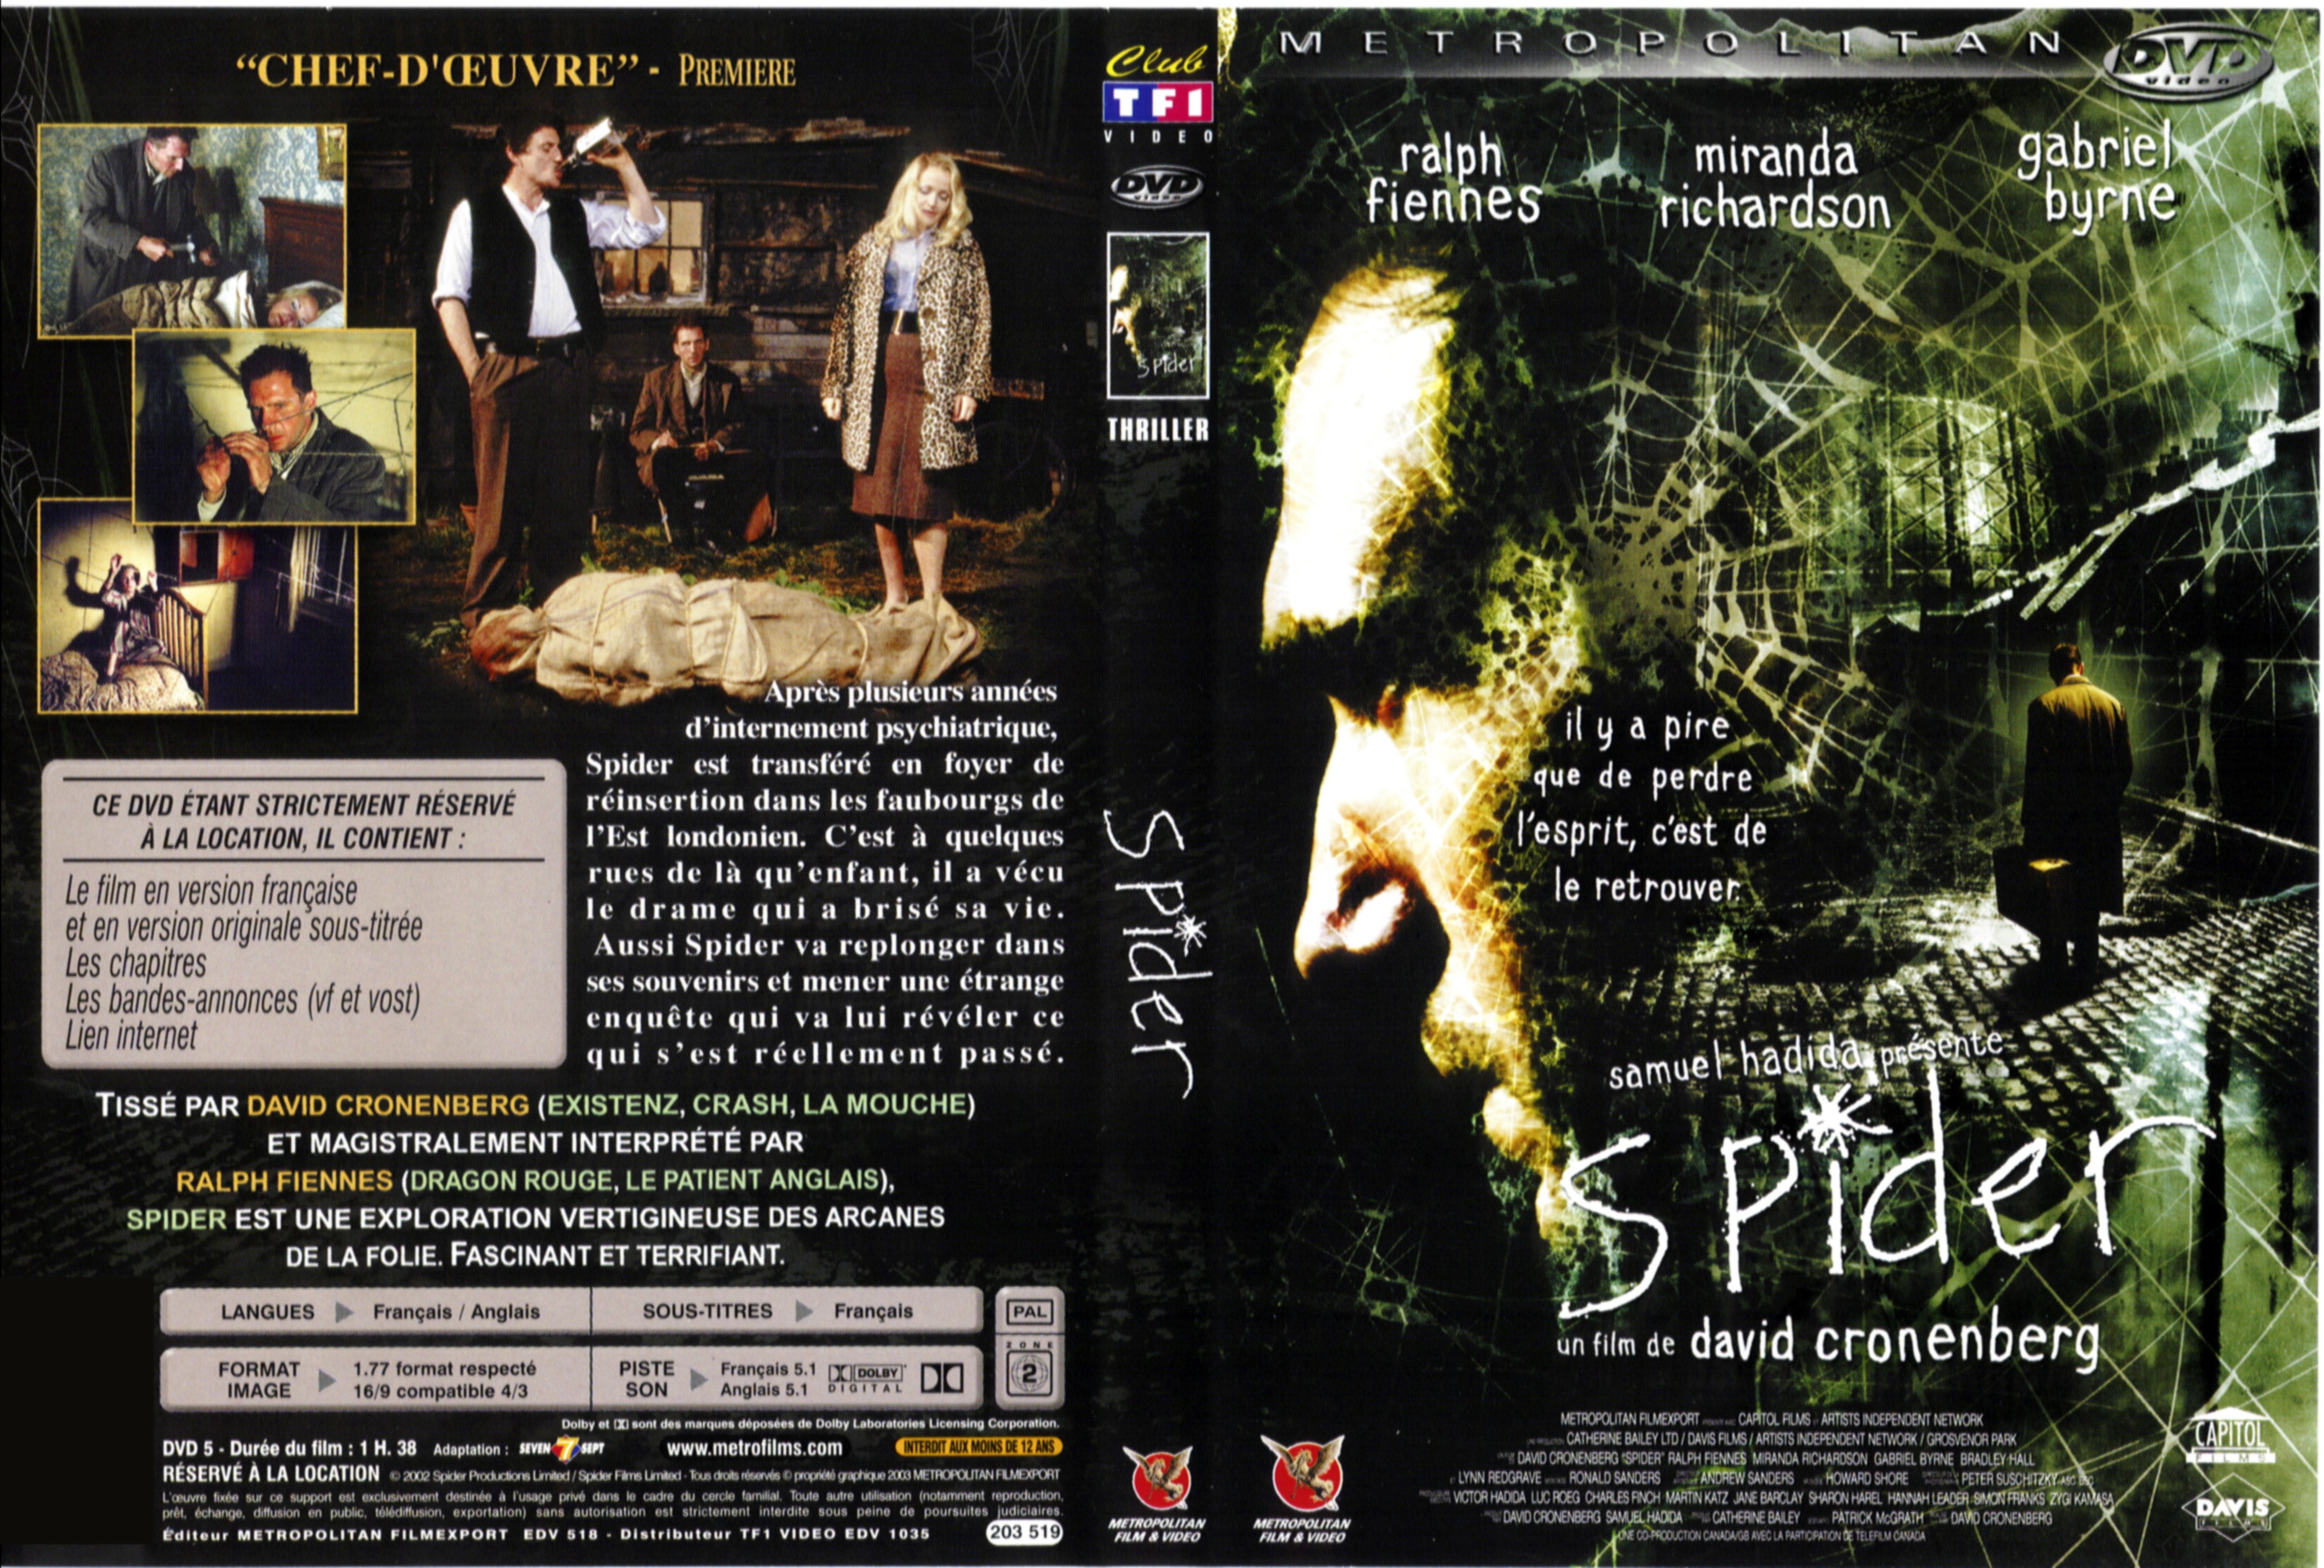 Jaquette DVD Spider